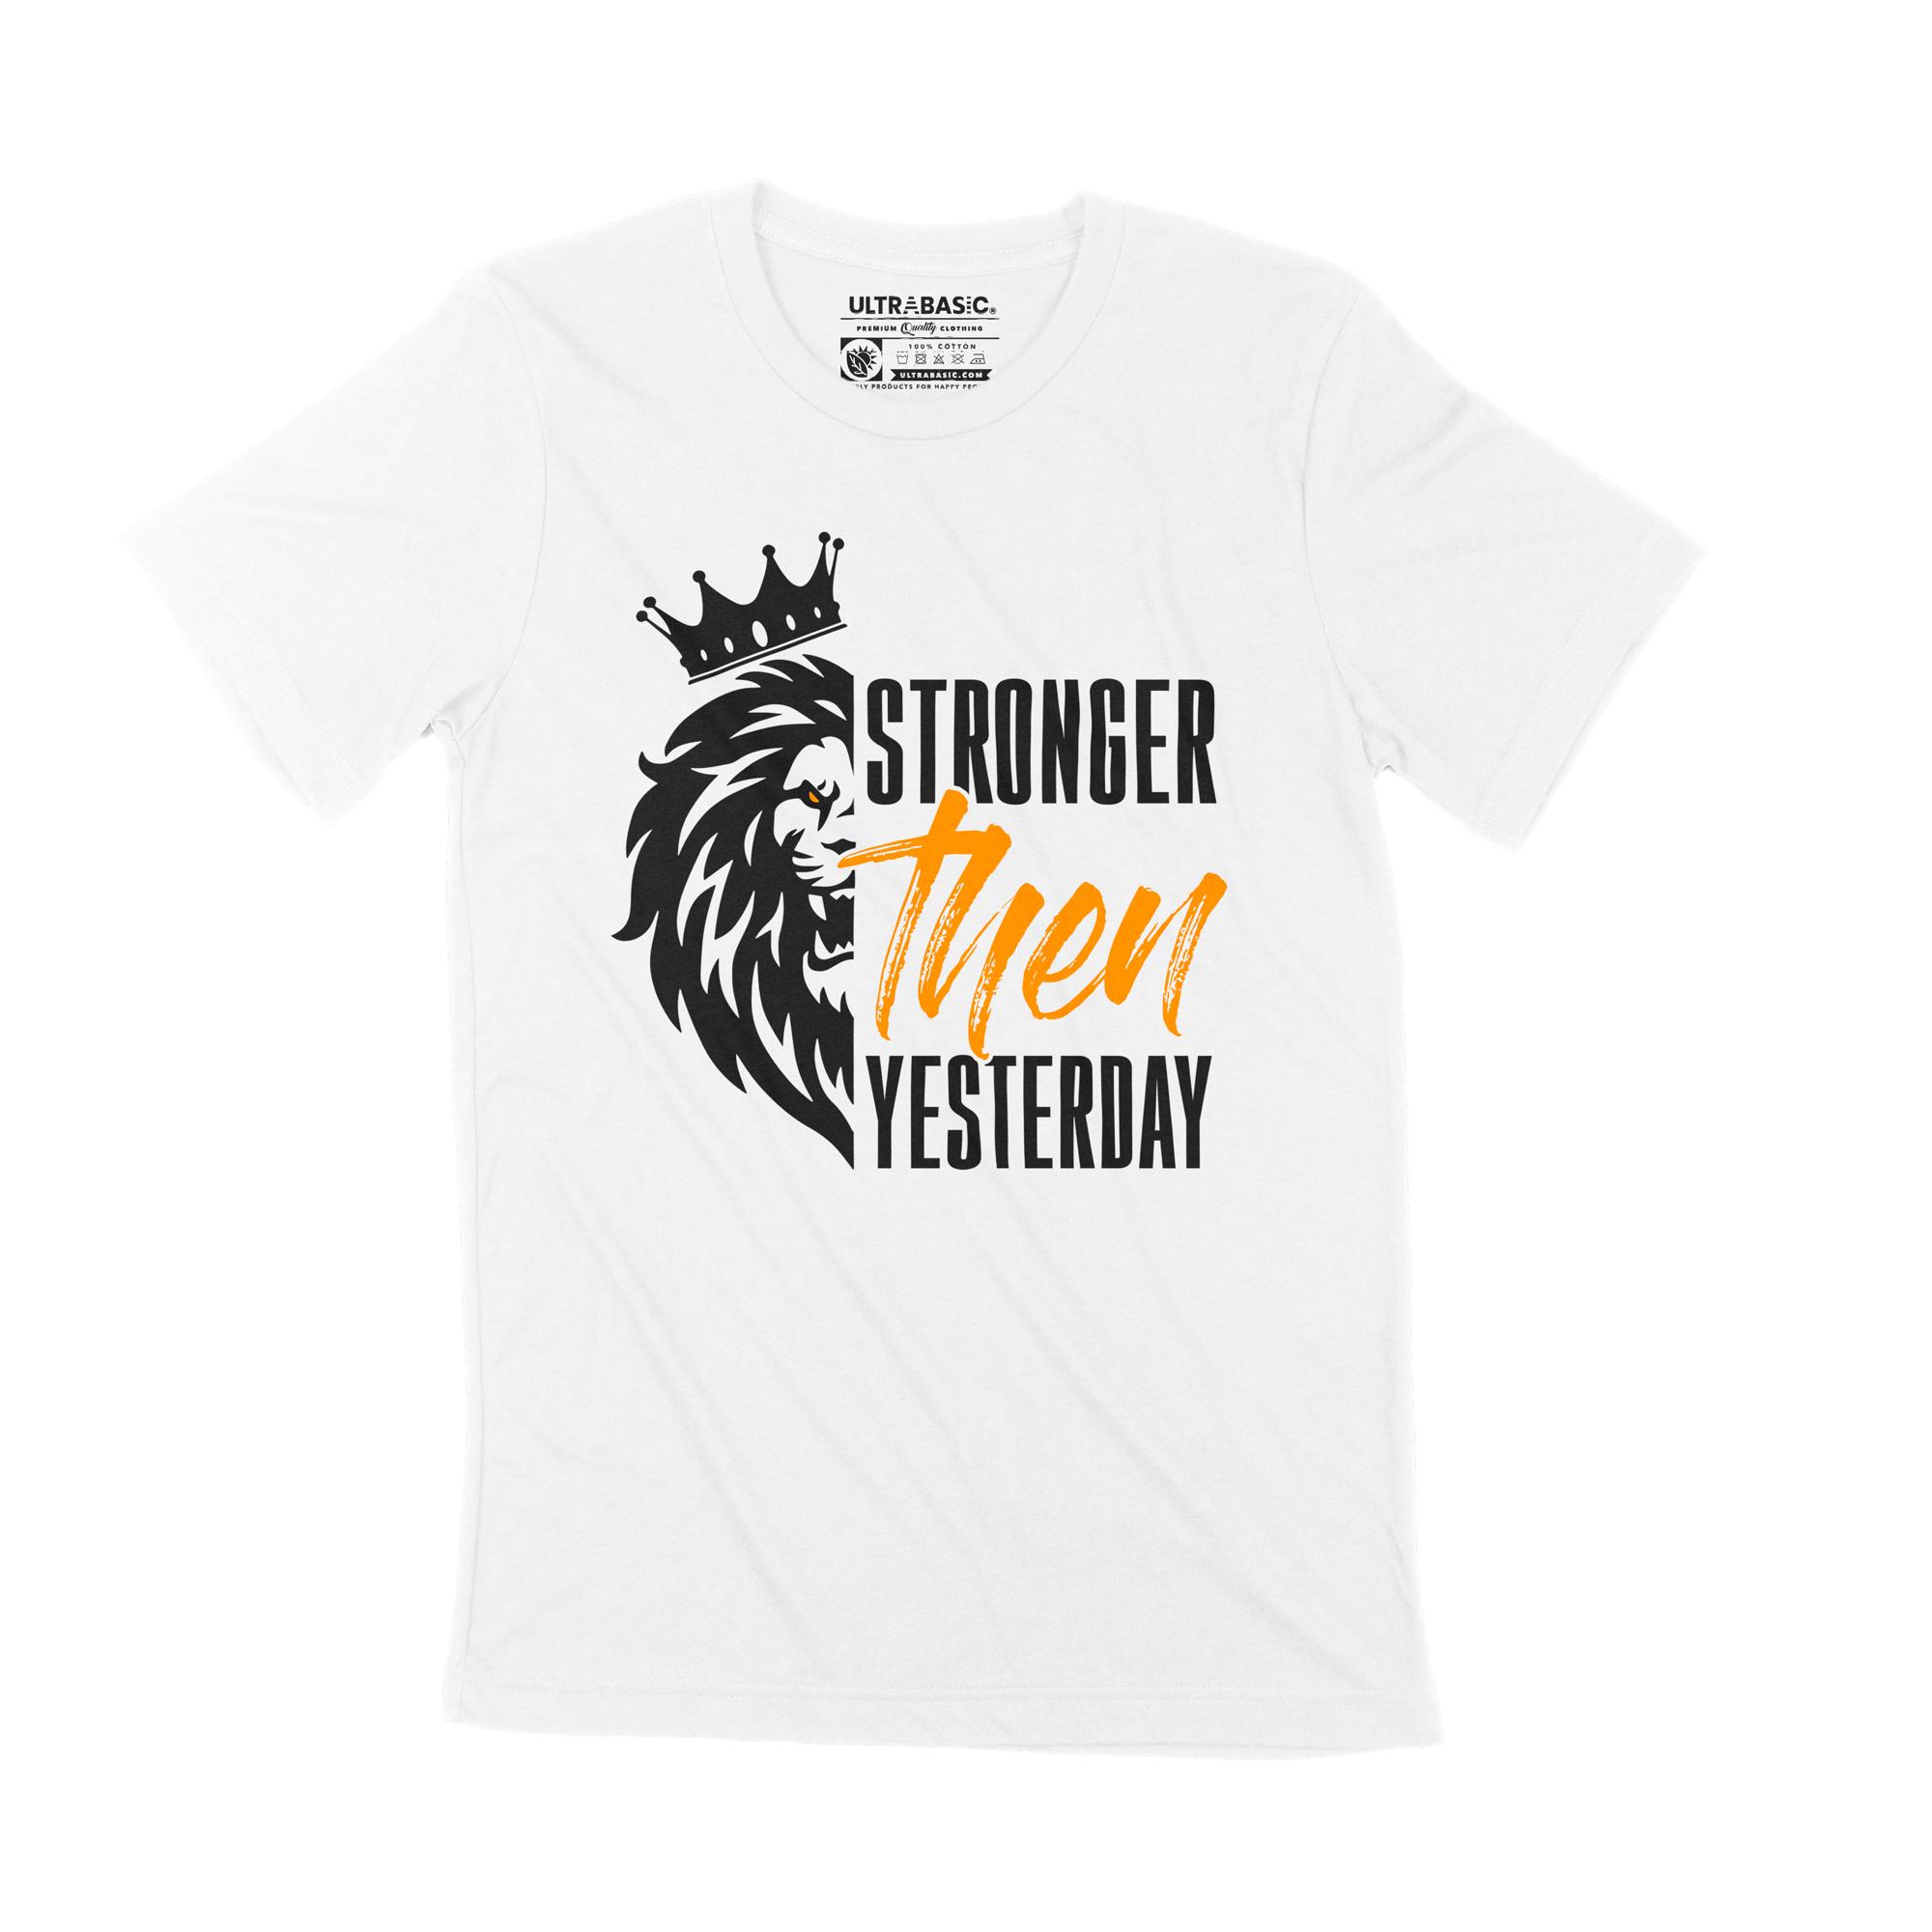 Ultrabasic grafisch T-shirt voor heren, sterker dan gisteren Black Lives Matter BLM-shirt